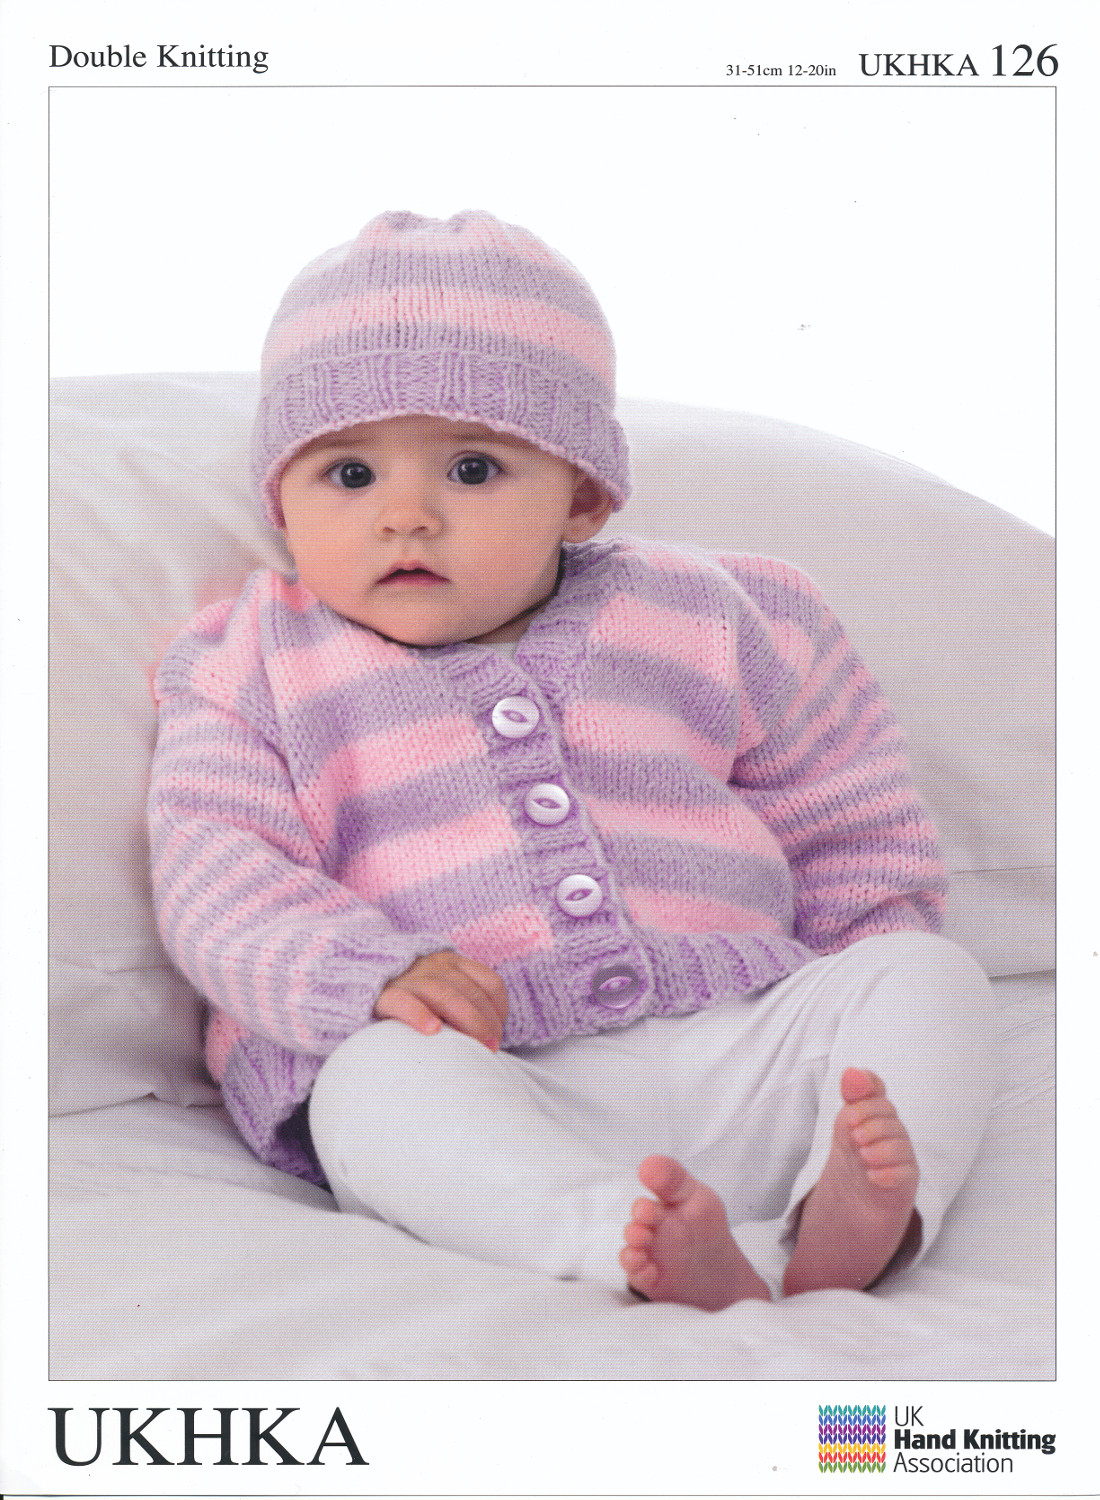 Free Baby Knitting Patterns Double Knit Double Knitting Dk Pattern Ba Long Sleeved Striped Cardigan Hat